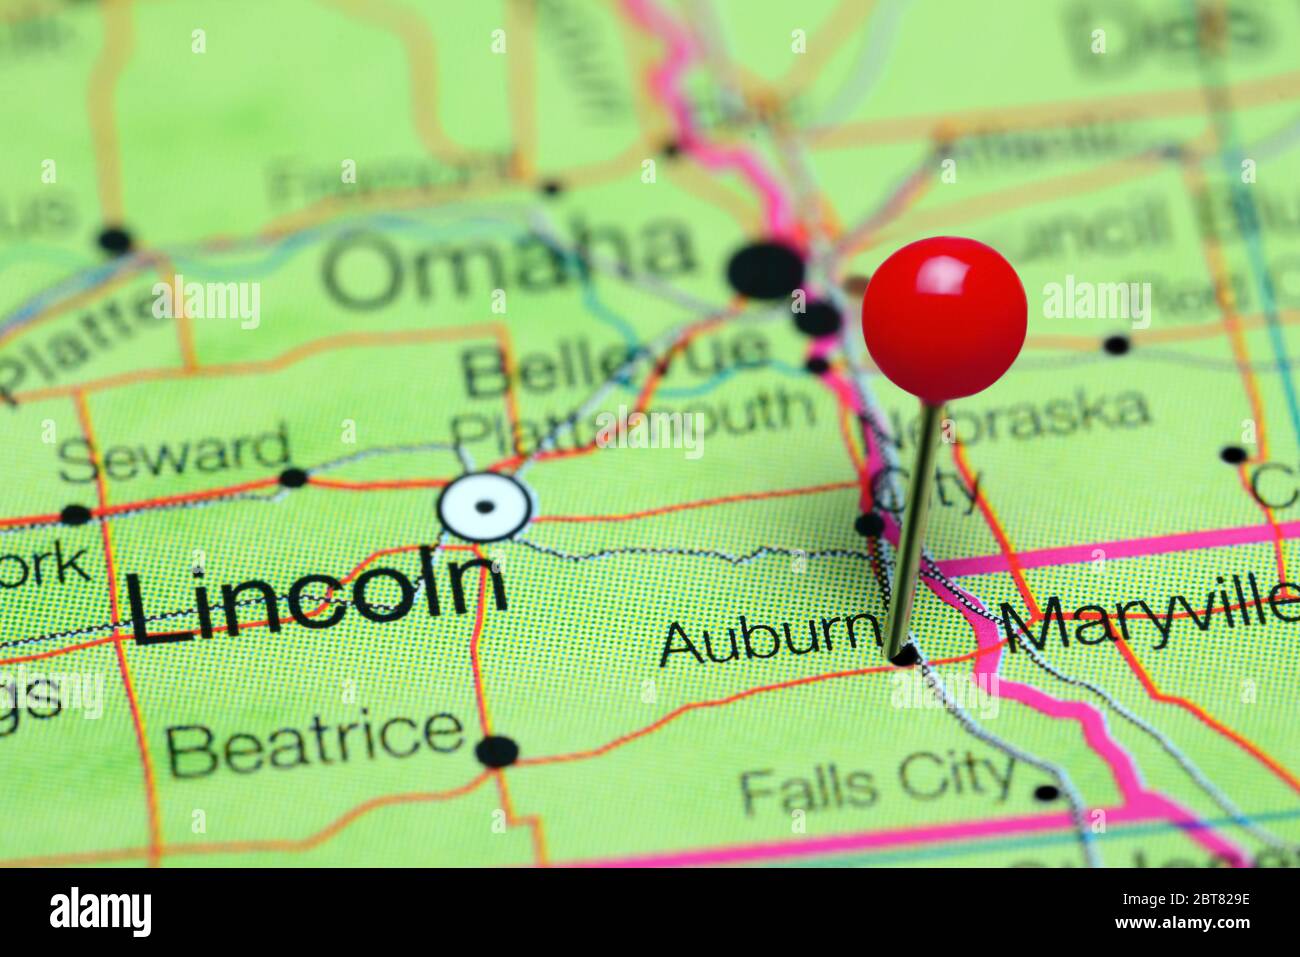 Auburn pinned on a map of Nebraska, USA Stock Photo